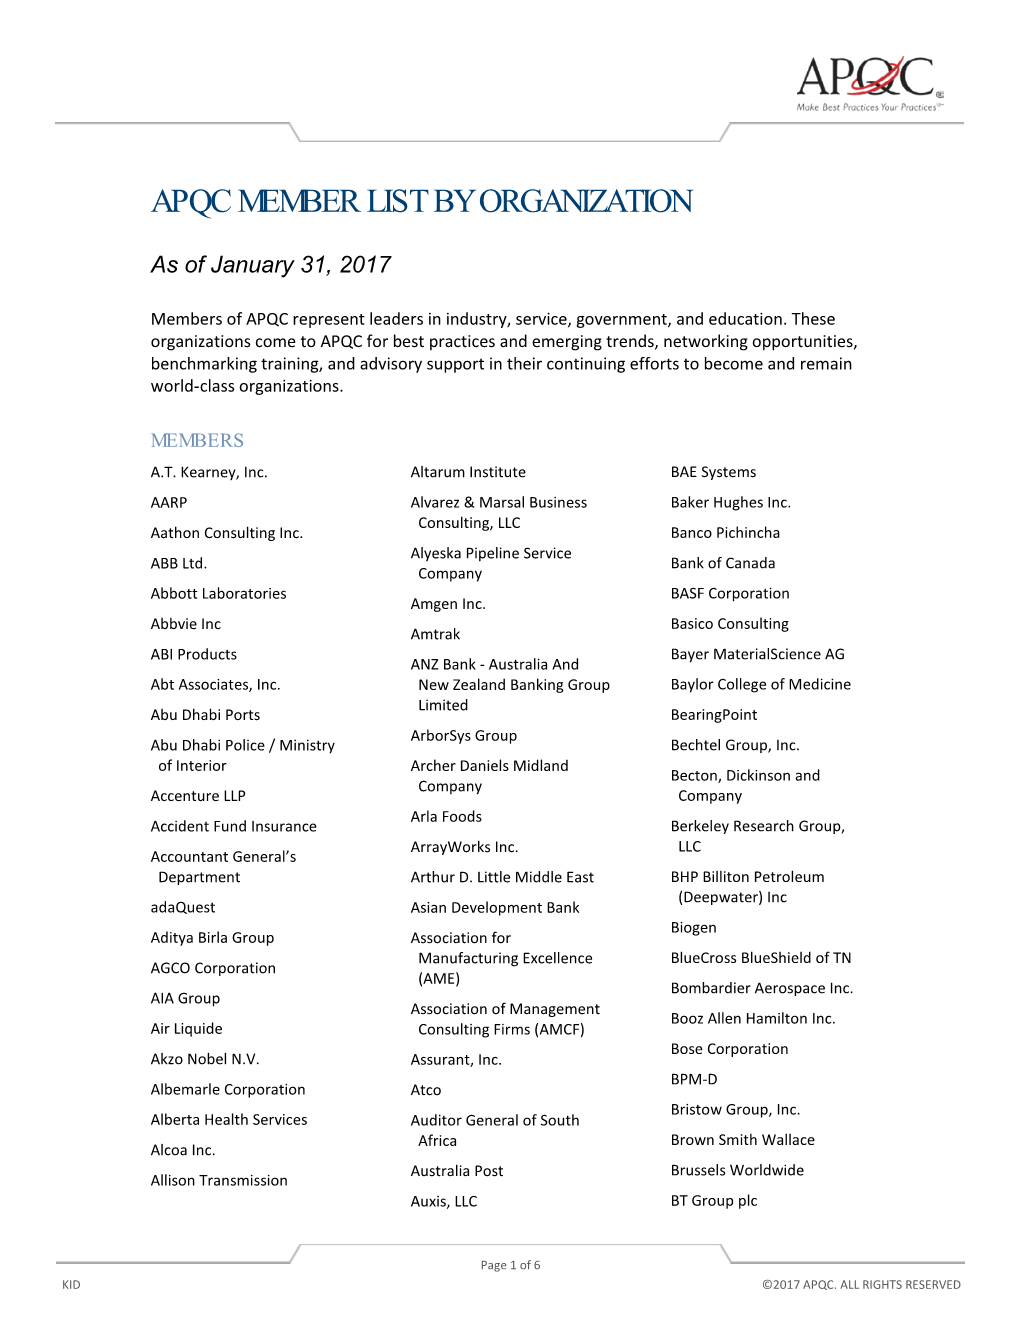 Apqc Member List by Organization